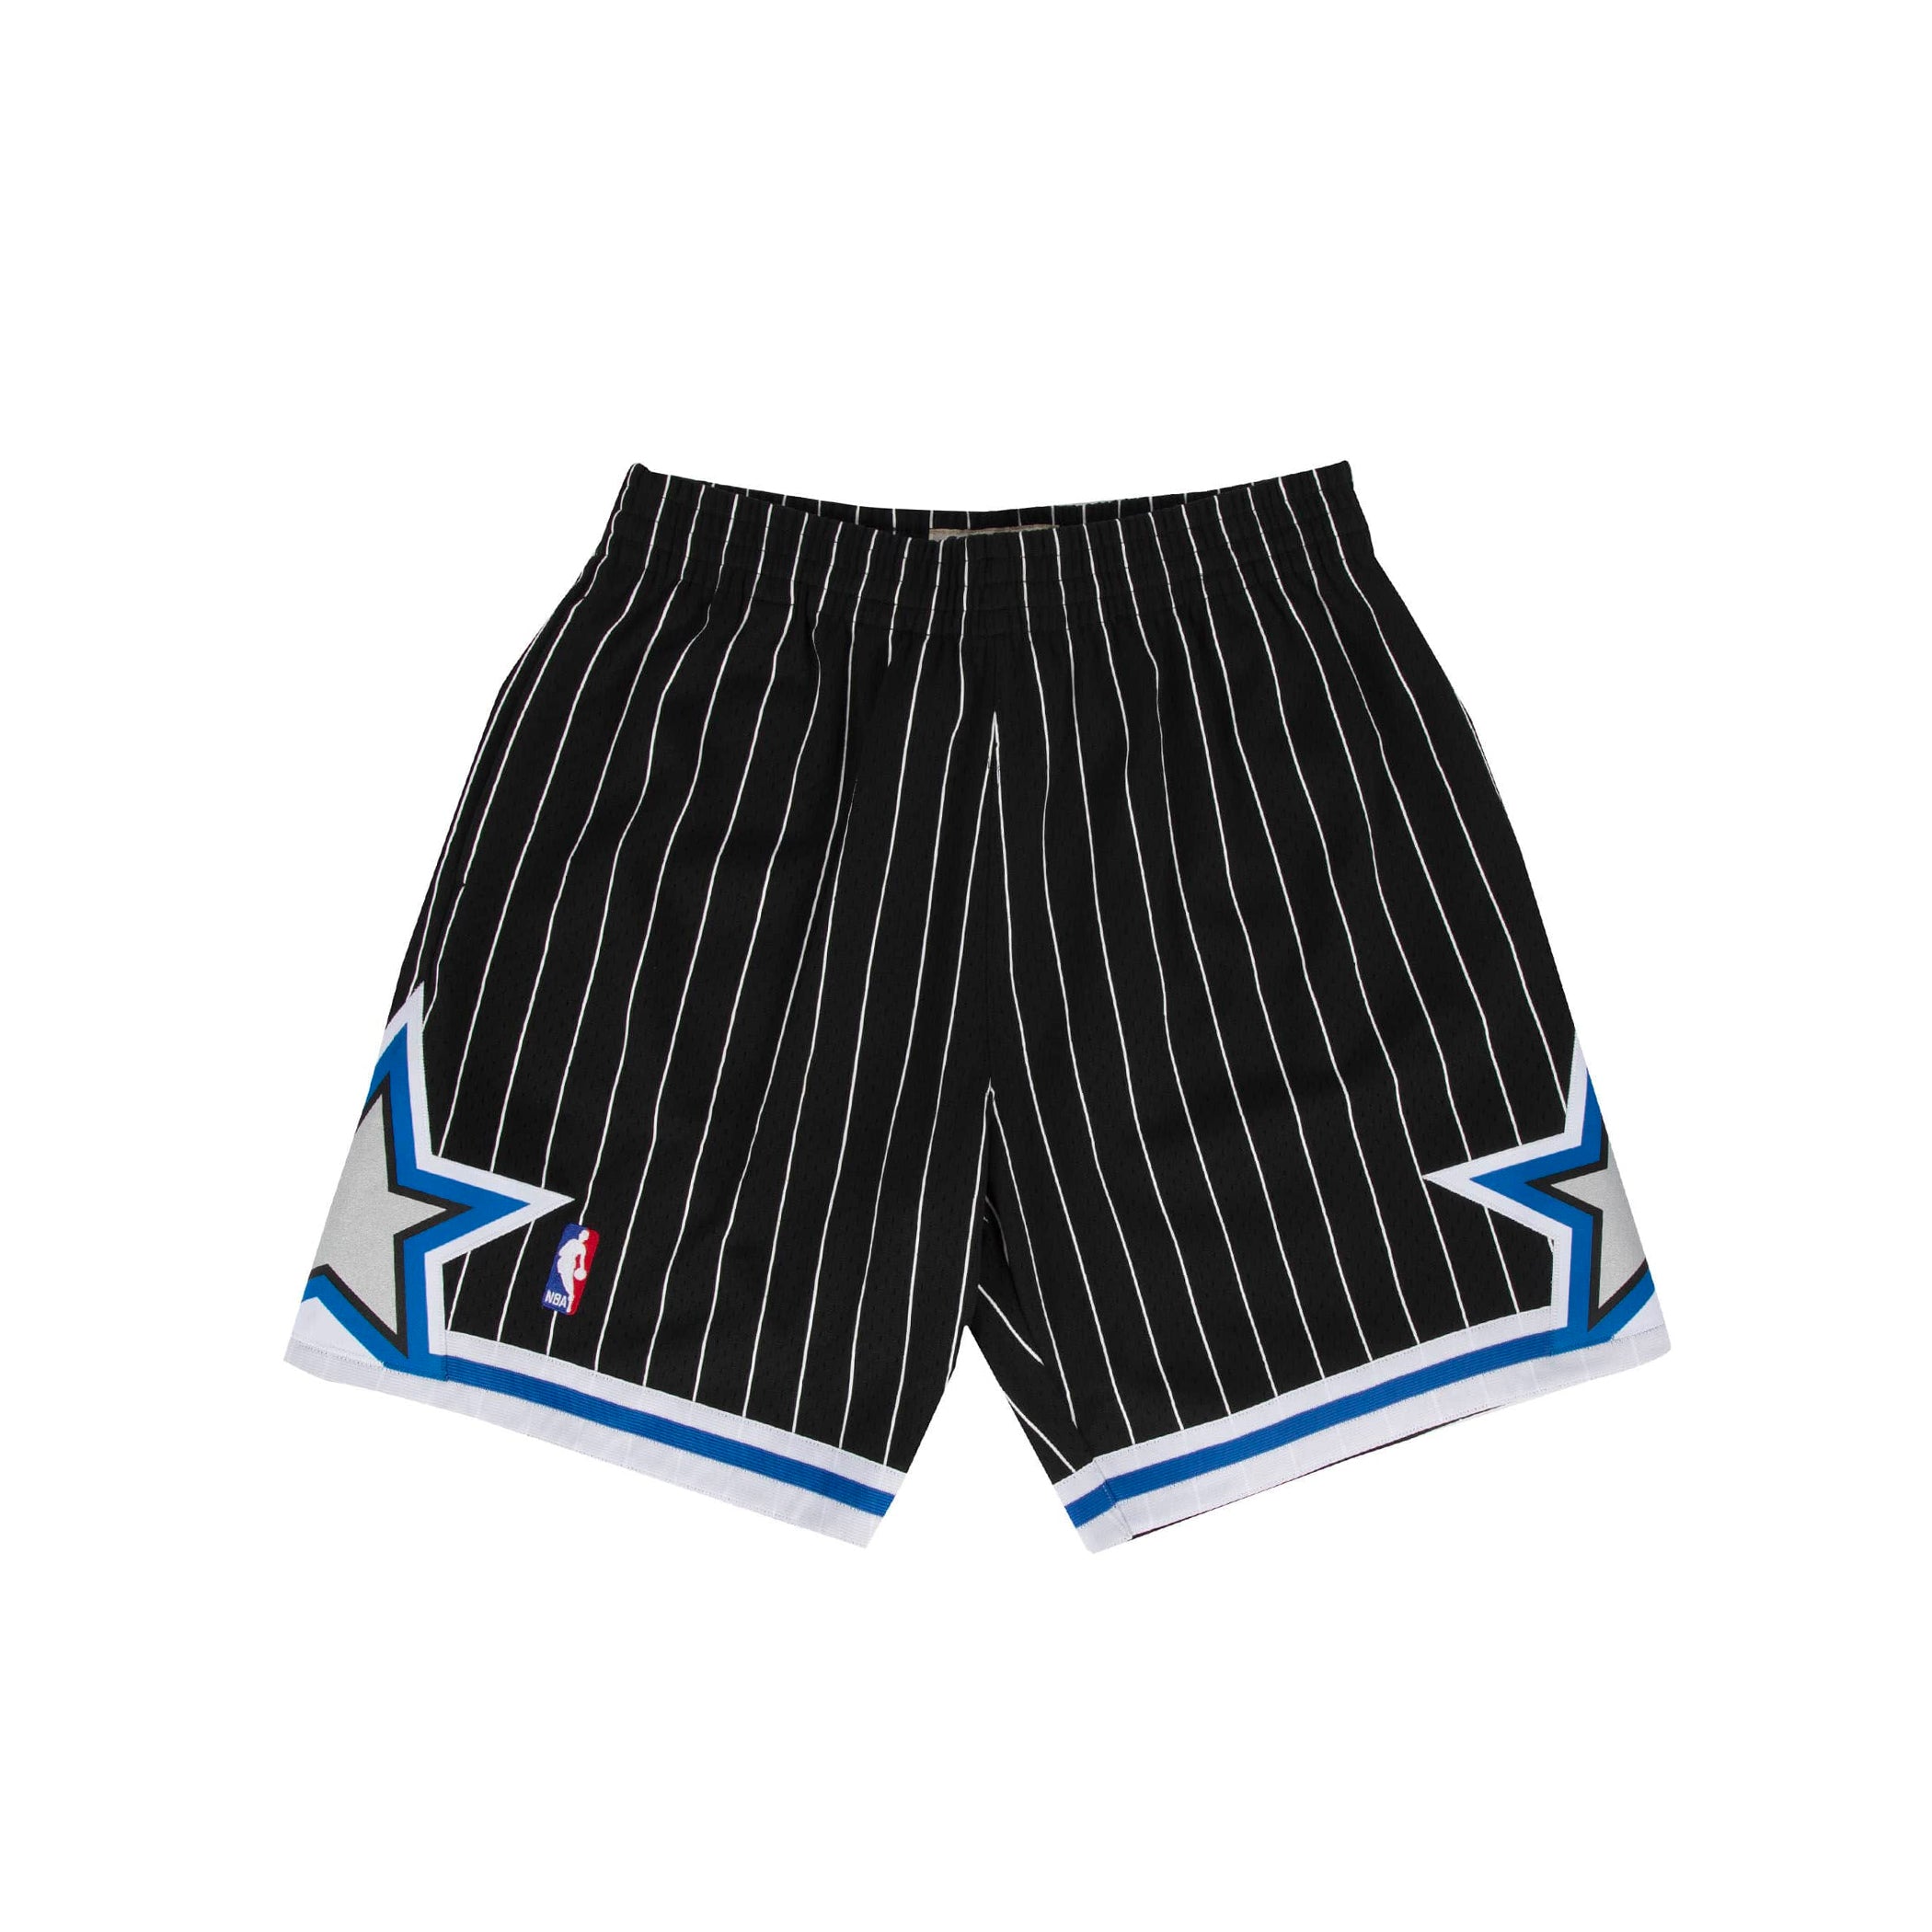 $100 Mens Size L Mitchell & Ness M&N Orlando Magic Gucci Color Swingman  Shorts 2